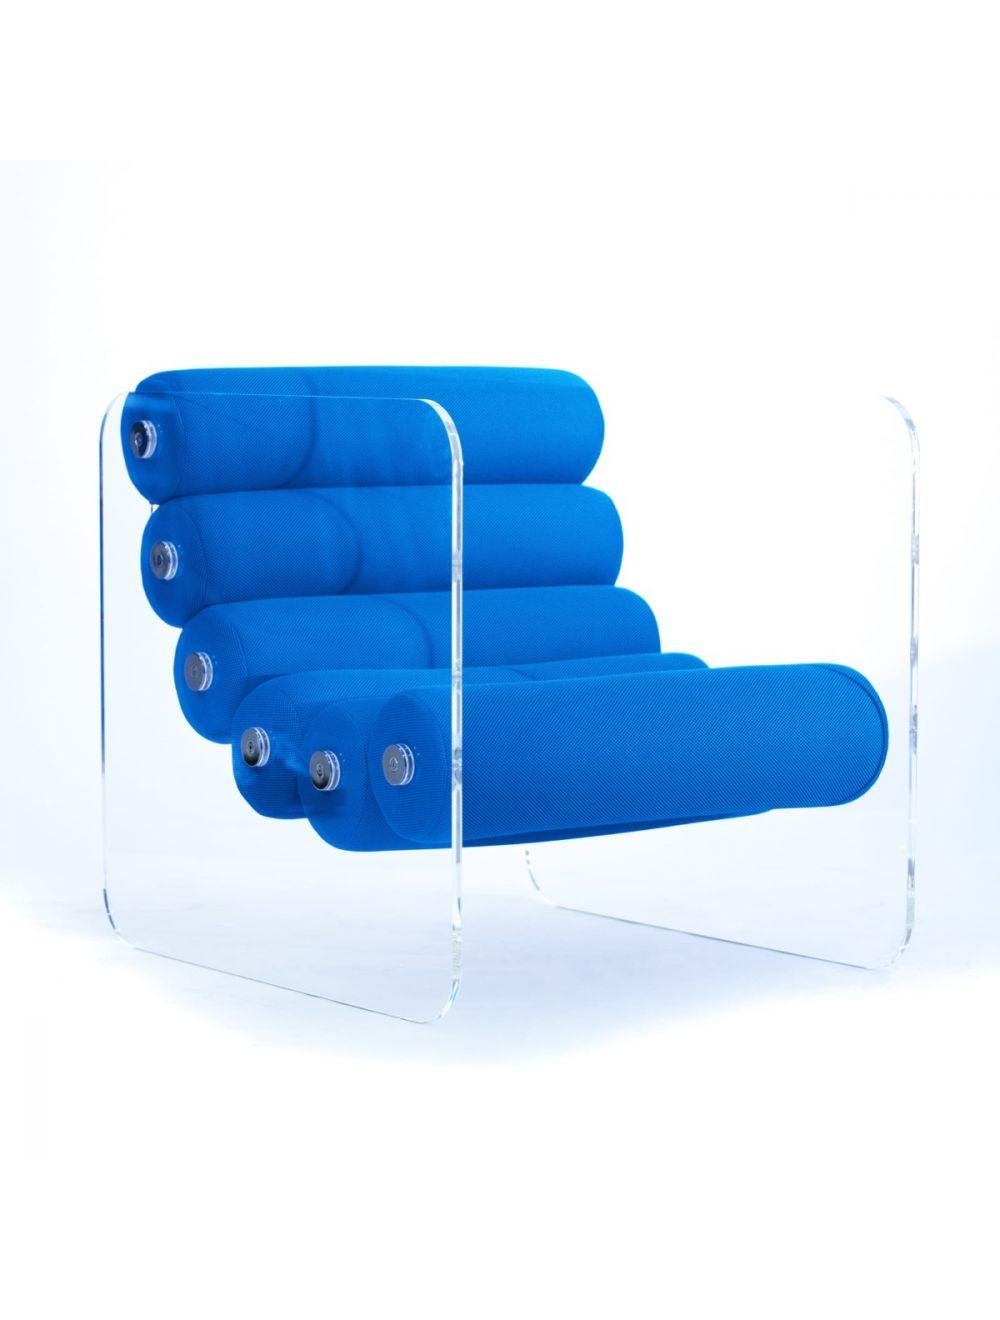 Foam Mw02 design armchair, handmade in France by designer Olivier Santini For Sale